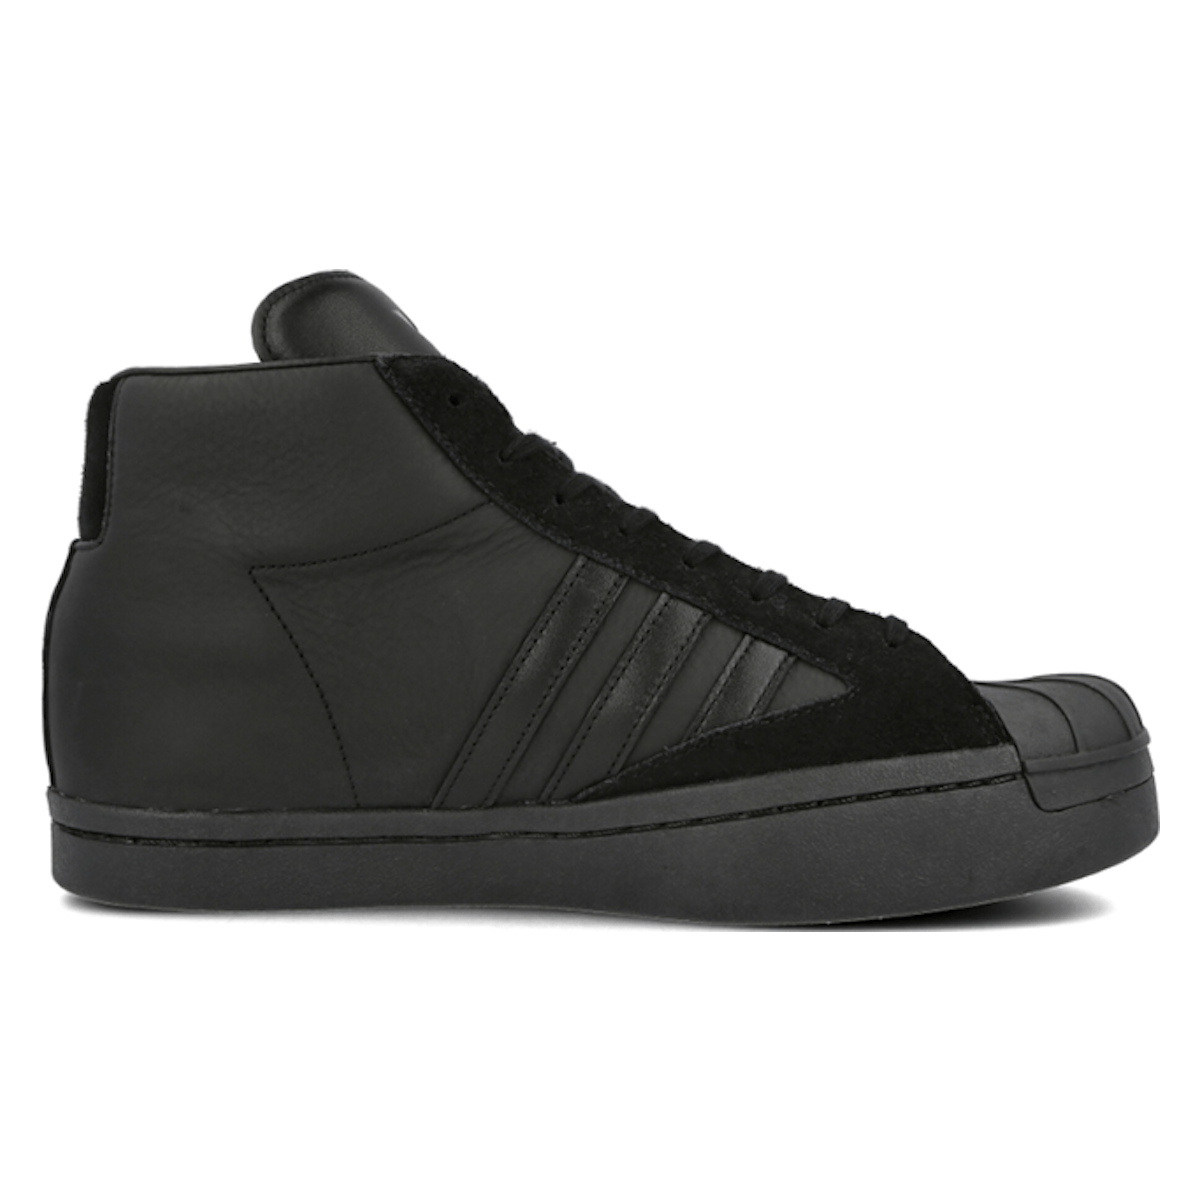 Adidas Y-3 Superskate Mid "Black"